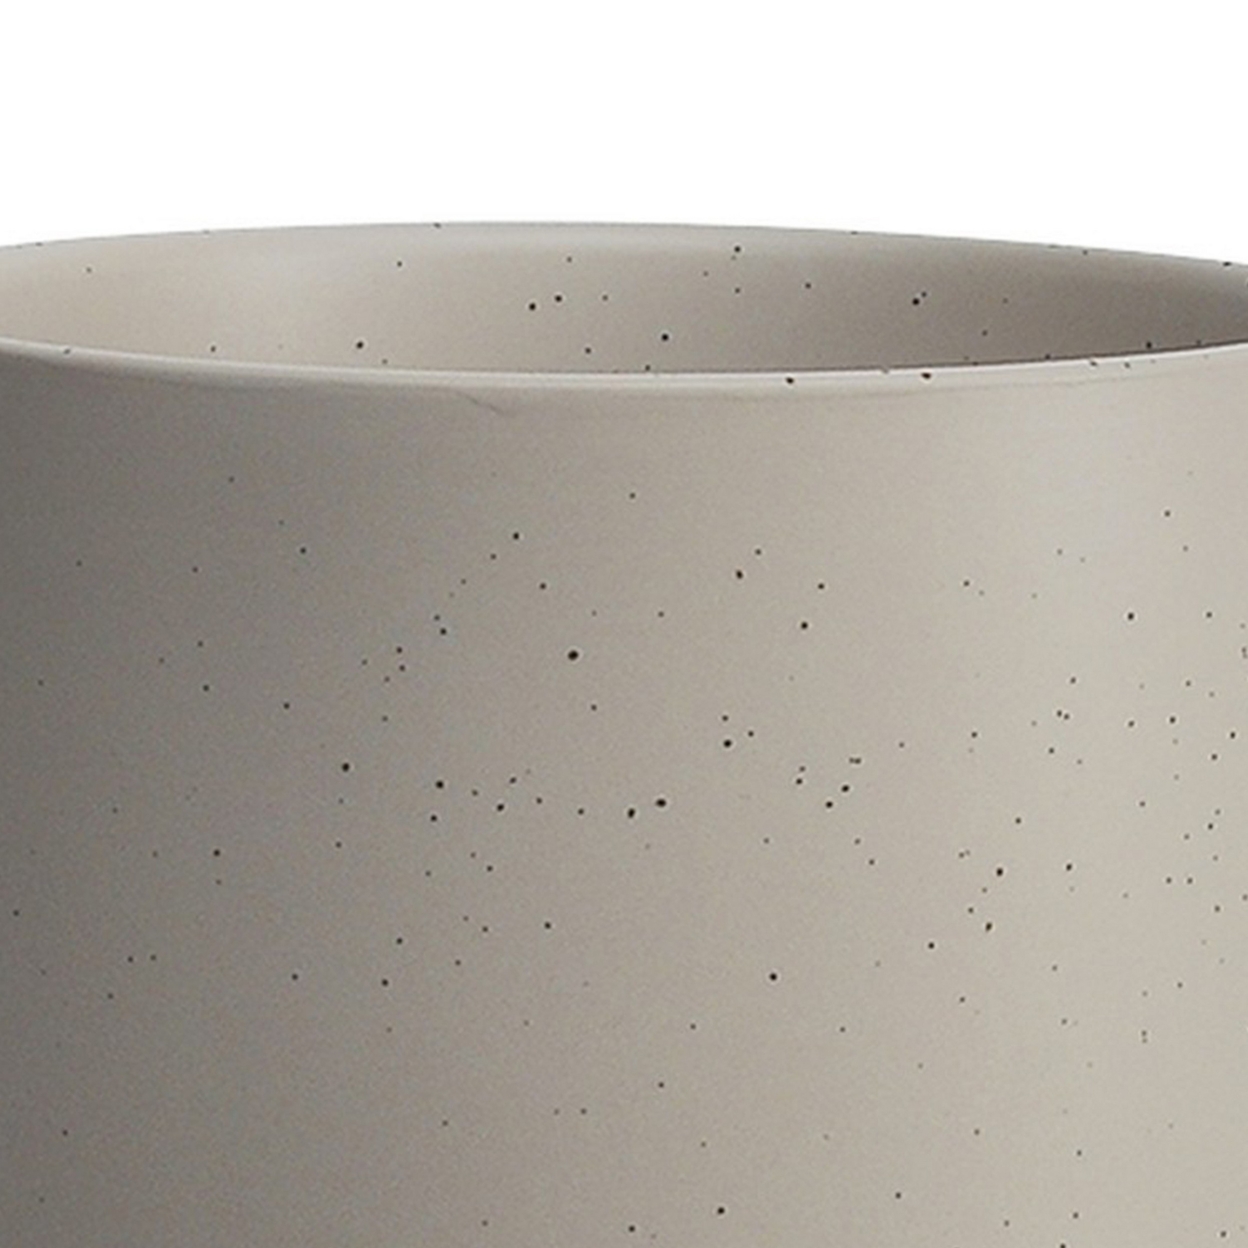 Ceramic Planter With Terrazzo Design And Wooden Stand, Large, Light Beige- Saltoro Sherpi